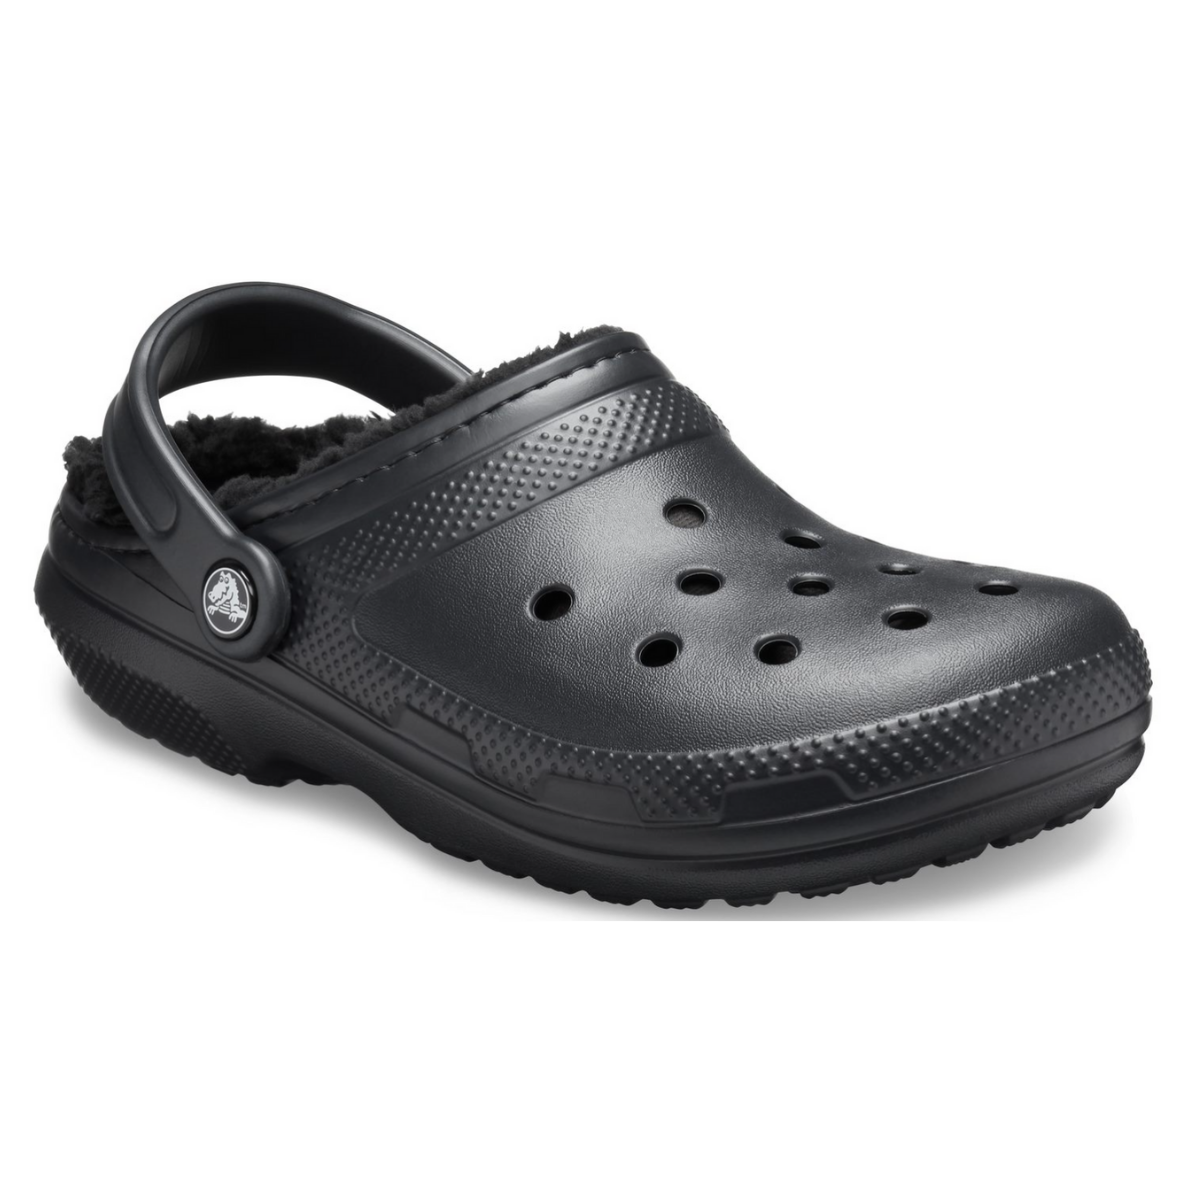 Classic Lined Clog - shoe&amp;me - Crocs - Crocs - Clogs, Crocs, Slipper